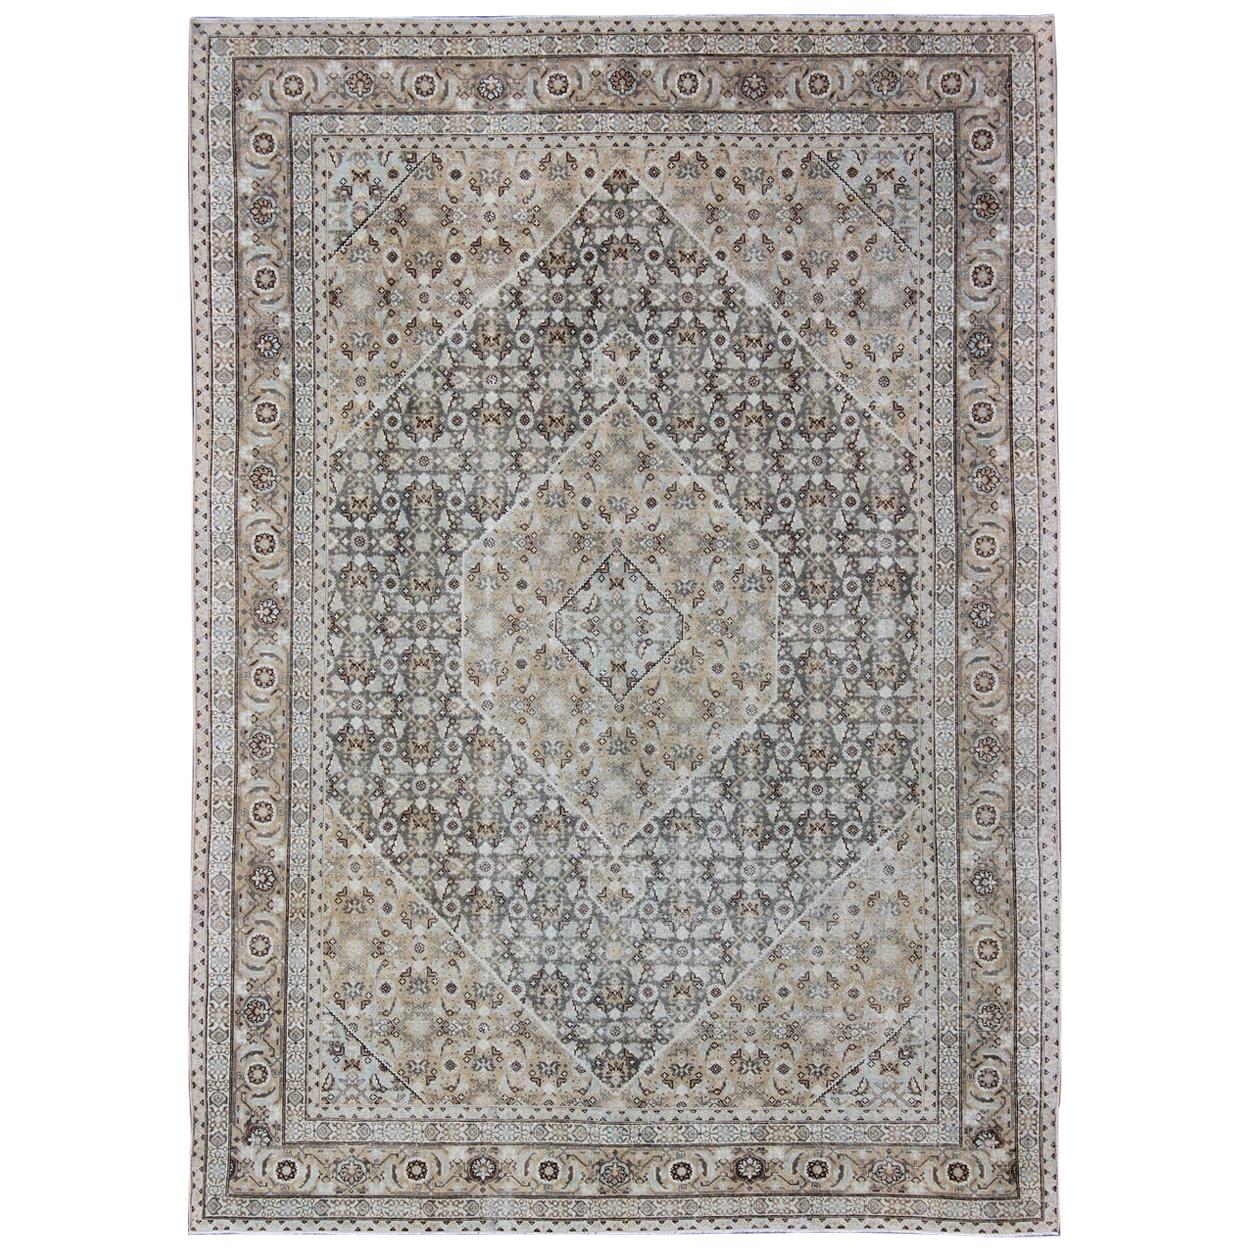 Antique Persian Tabriz Carpet with Geometric Diamond Design in Earth Tones For Sale